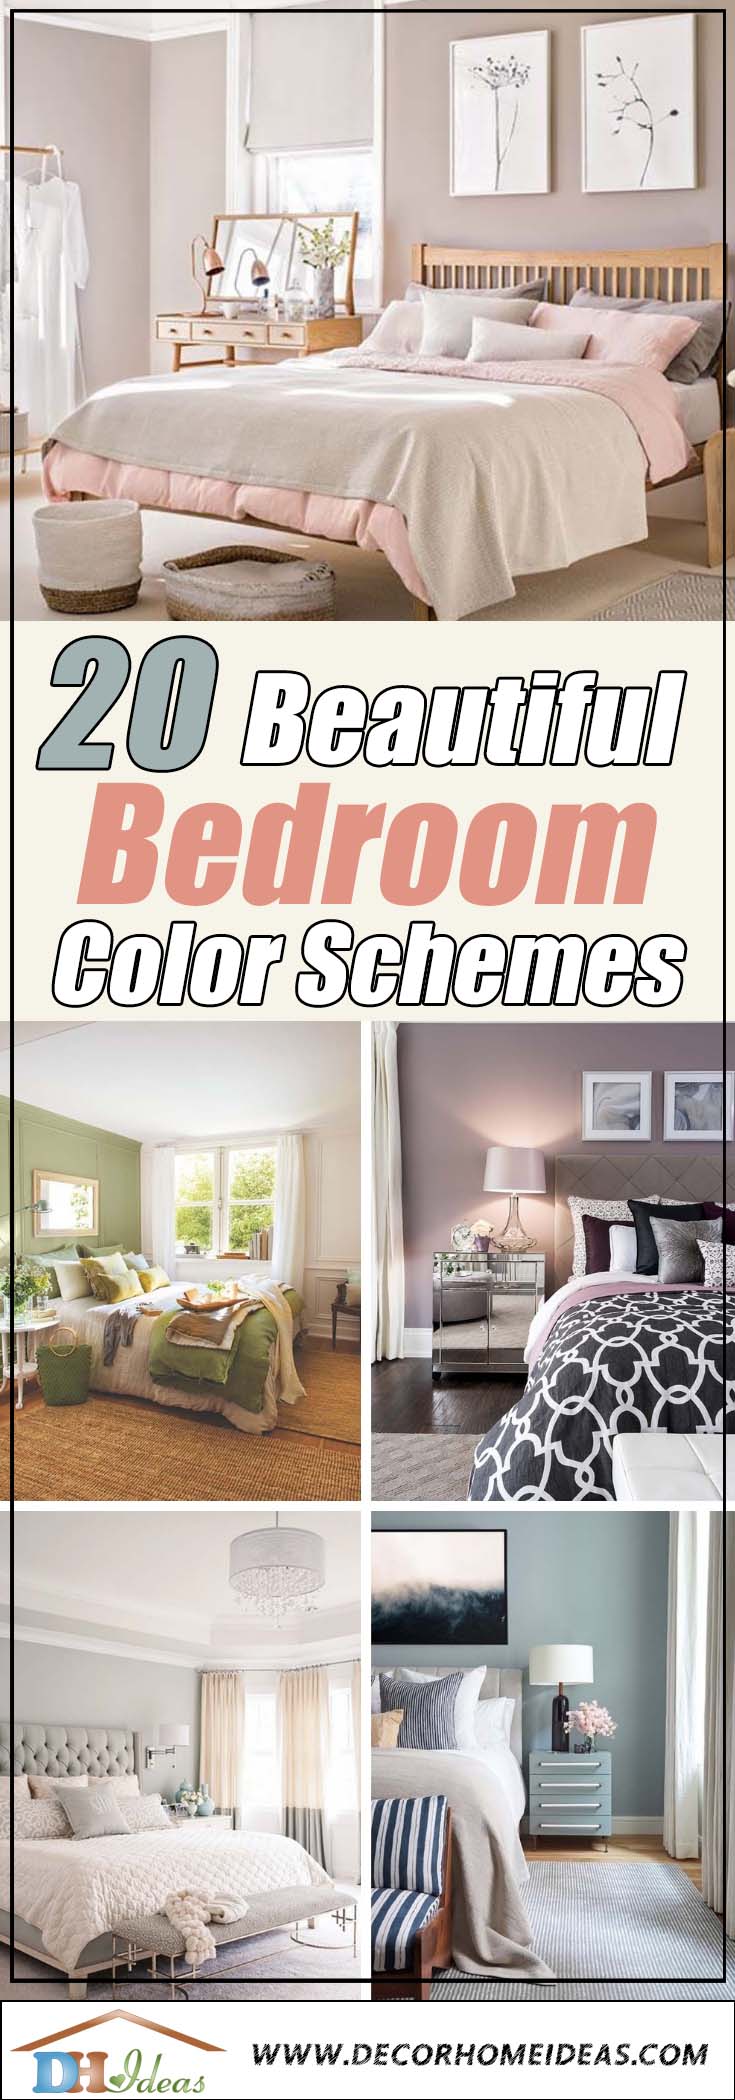 Beautiful Bedroom Color Schemes SW Color Names Included #bedroom #color #scheme #decorhomeideas #colorchart